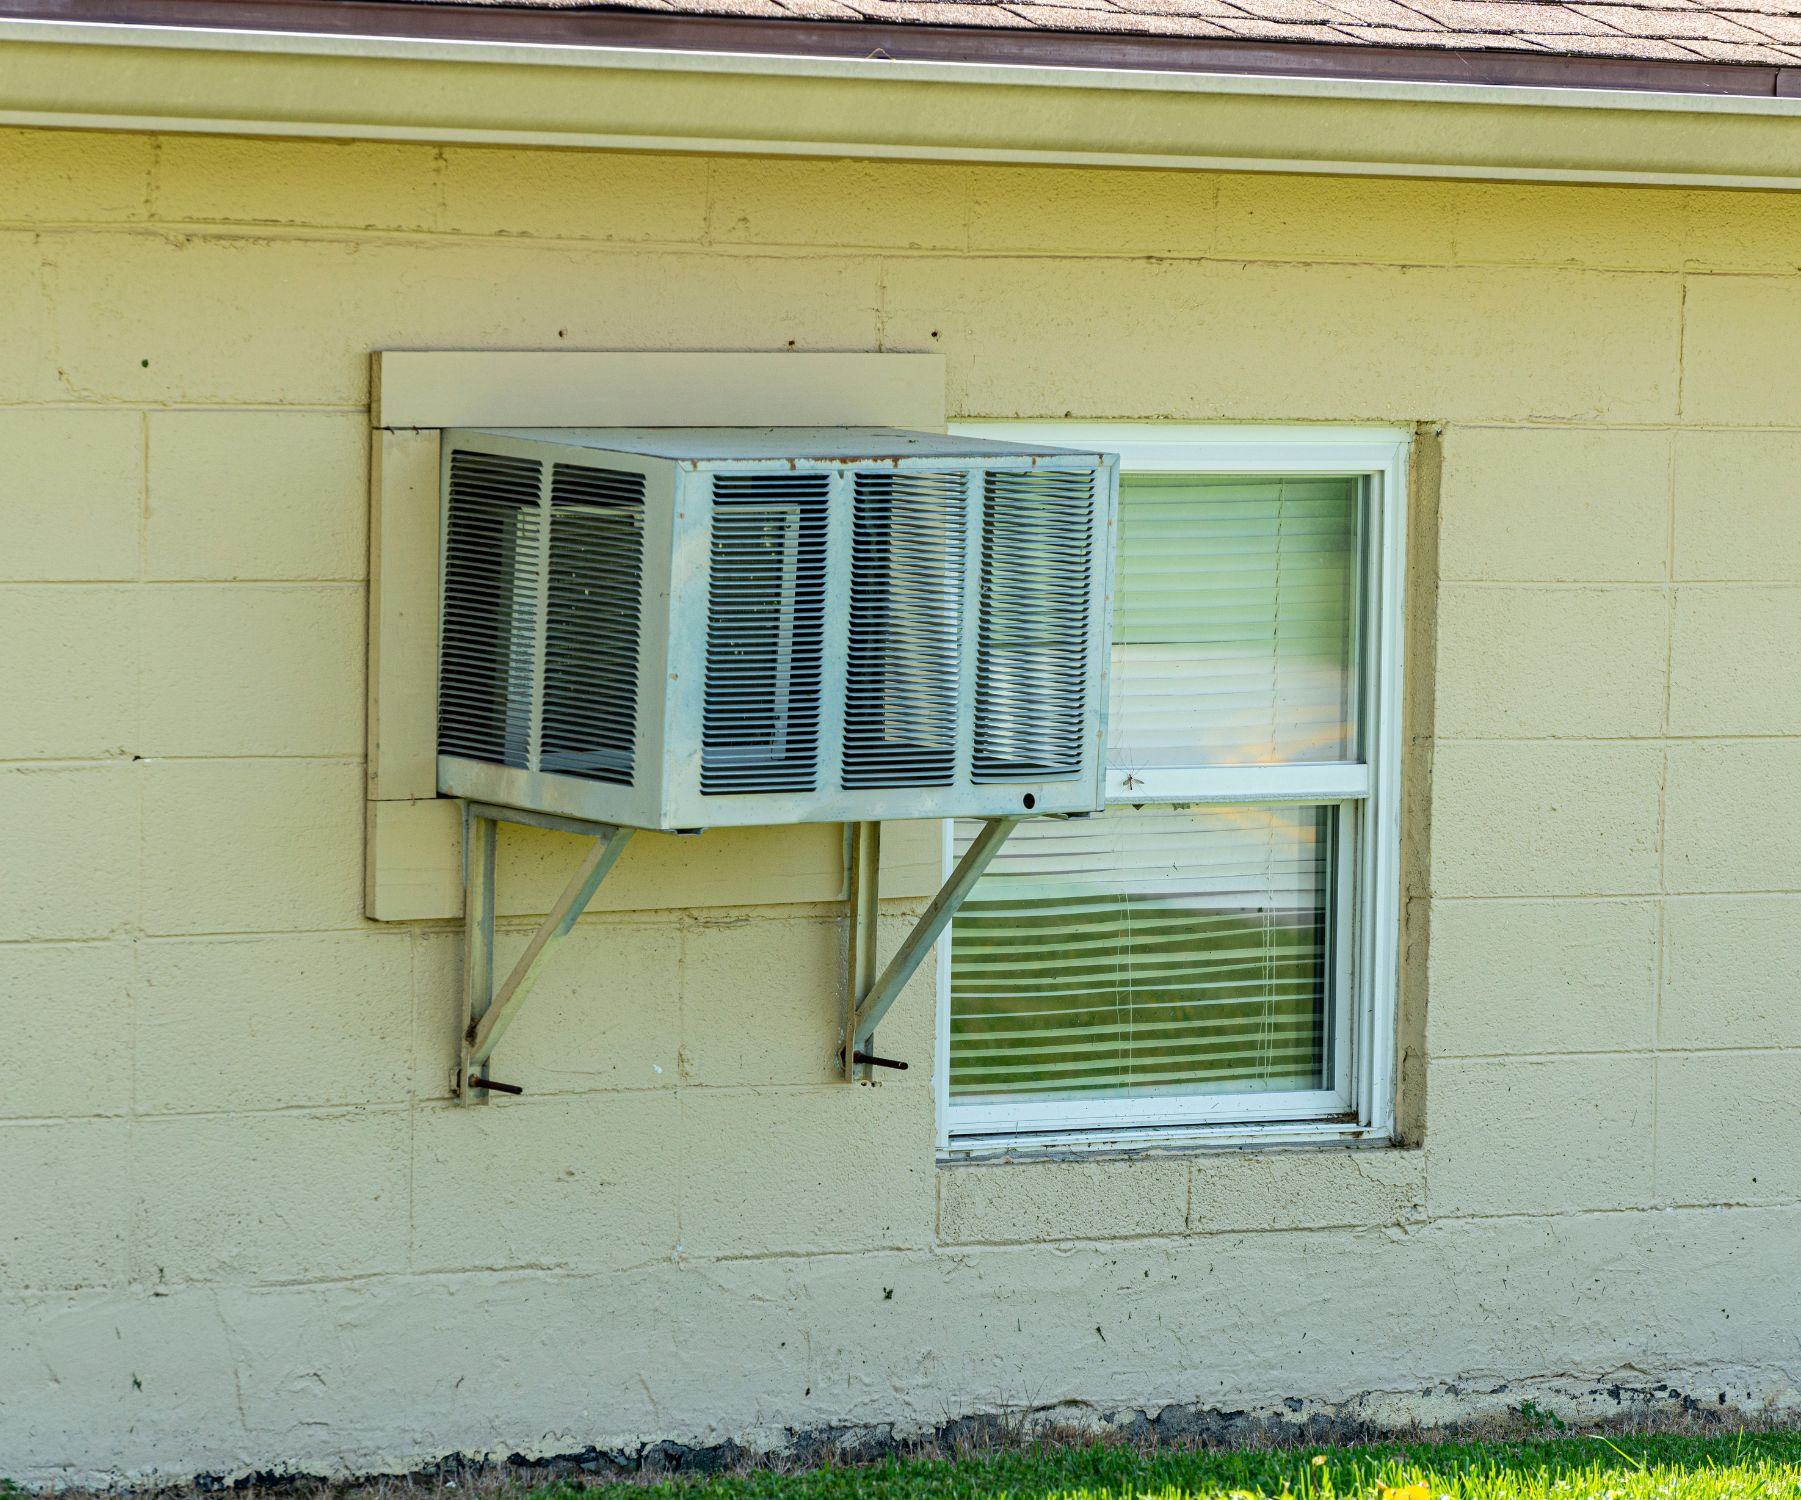 Window AC vs Through the Wall